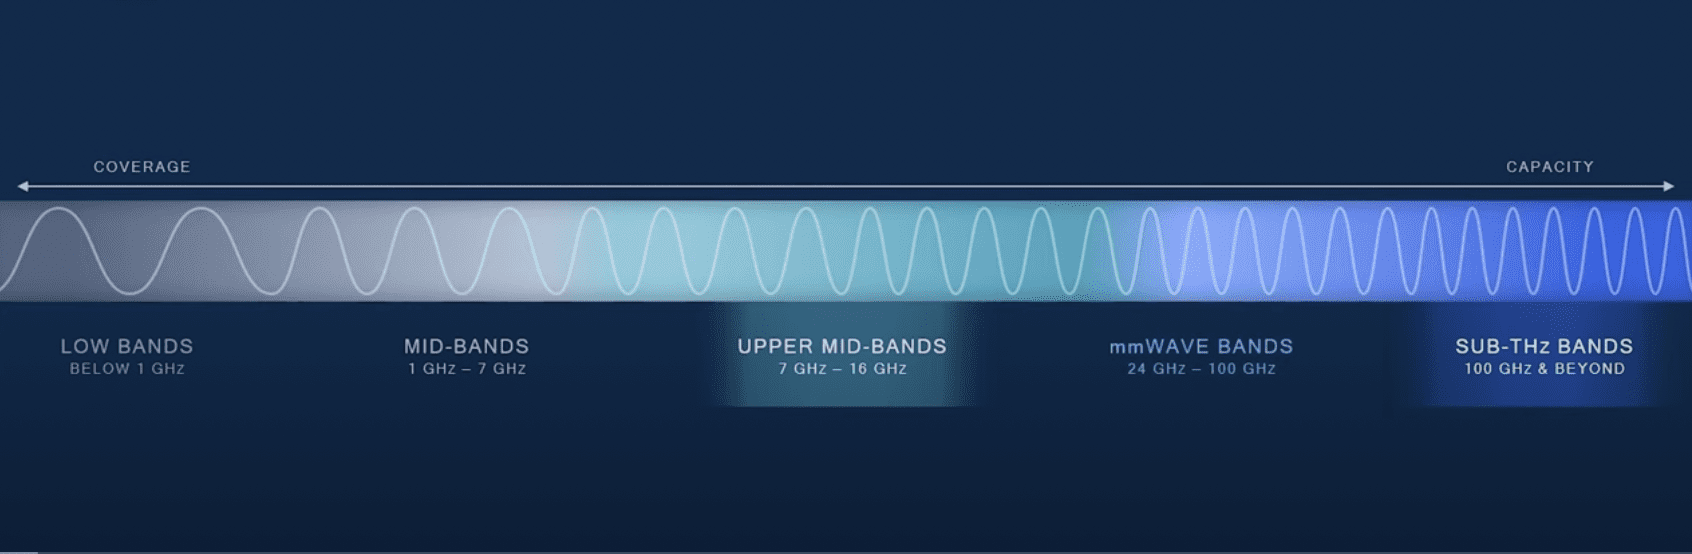 6G spectrum upper mid band